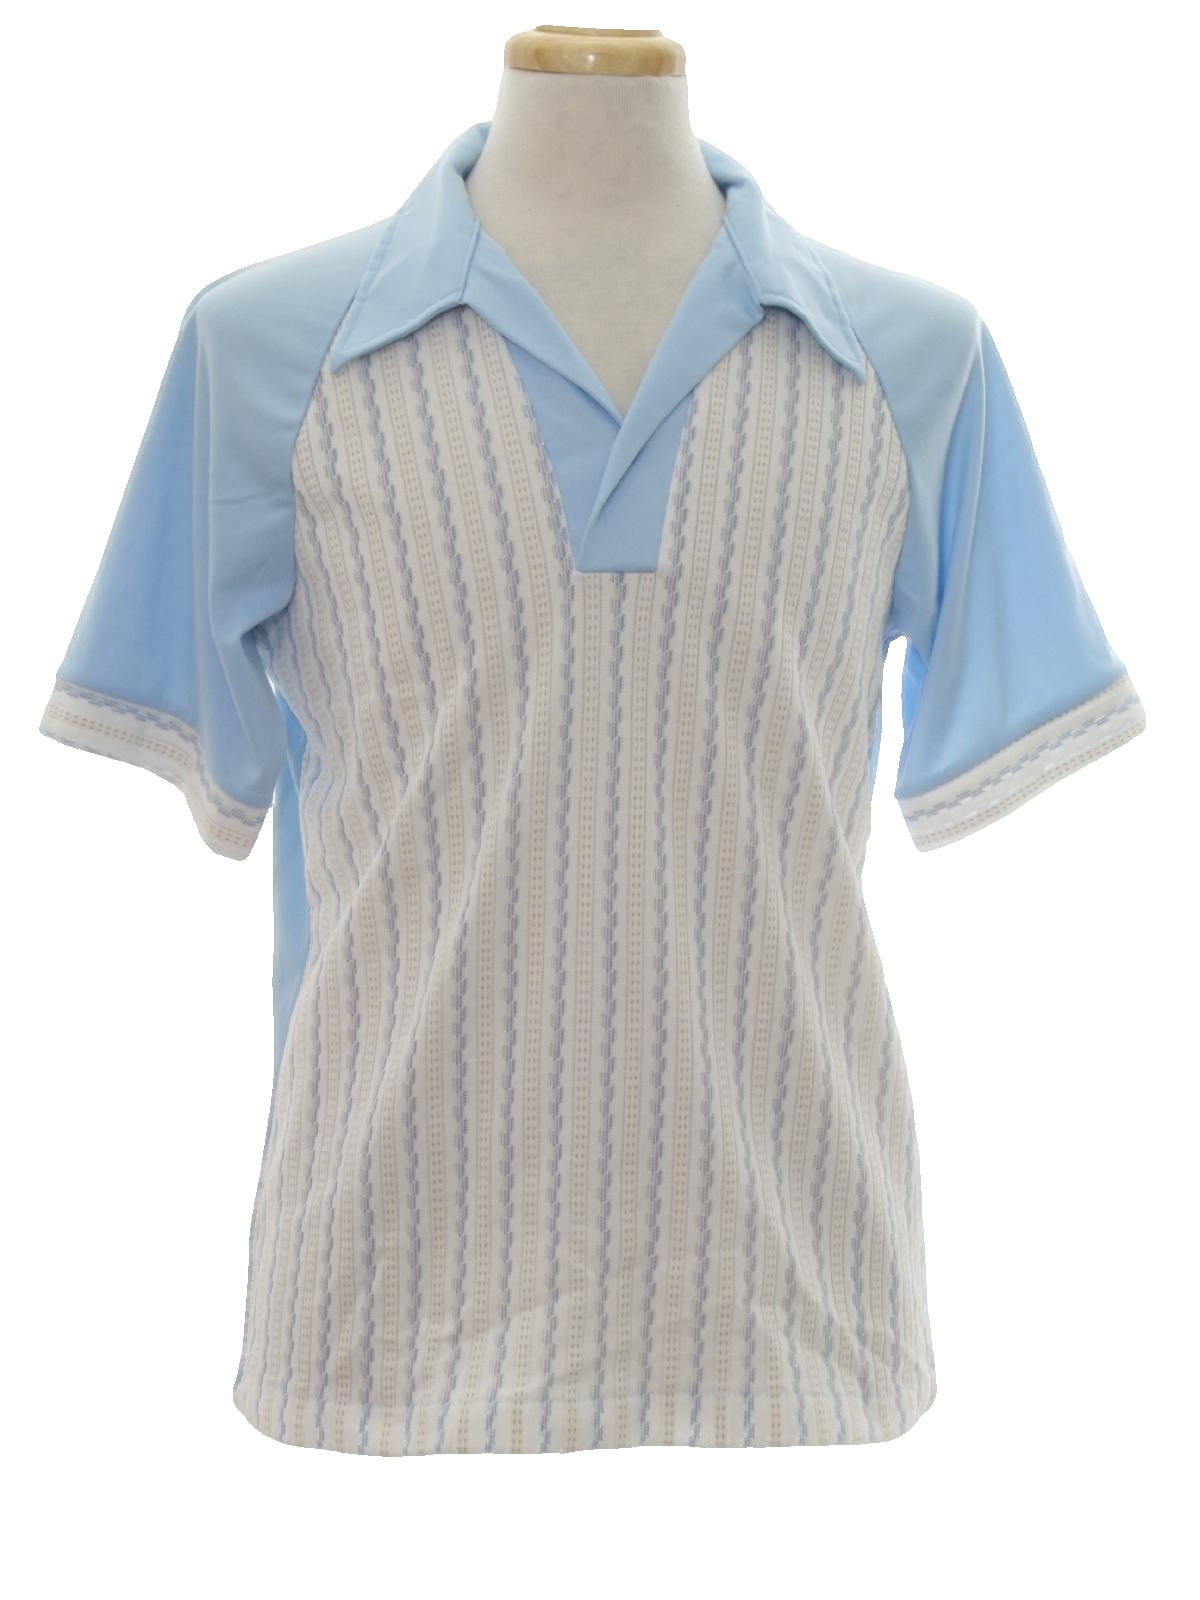 Retro 1970's Knit Shirt (Kings Road) : 70s -Kings Road- Mens baby blue ...